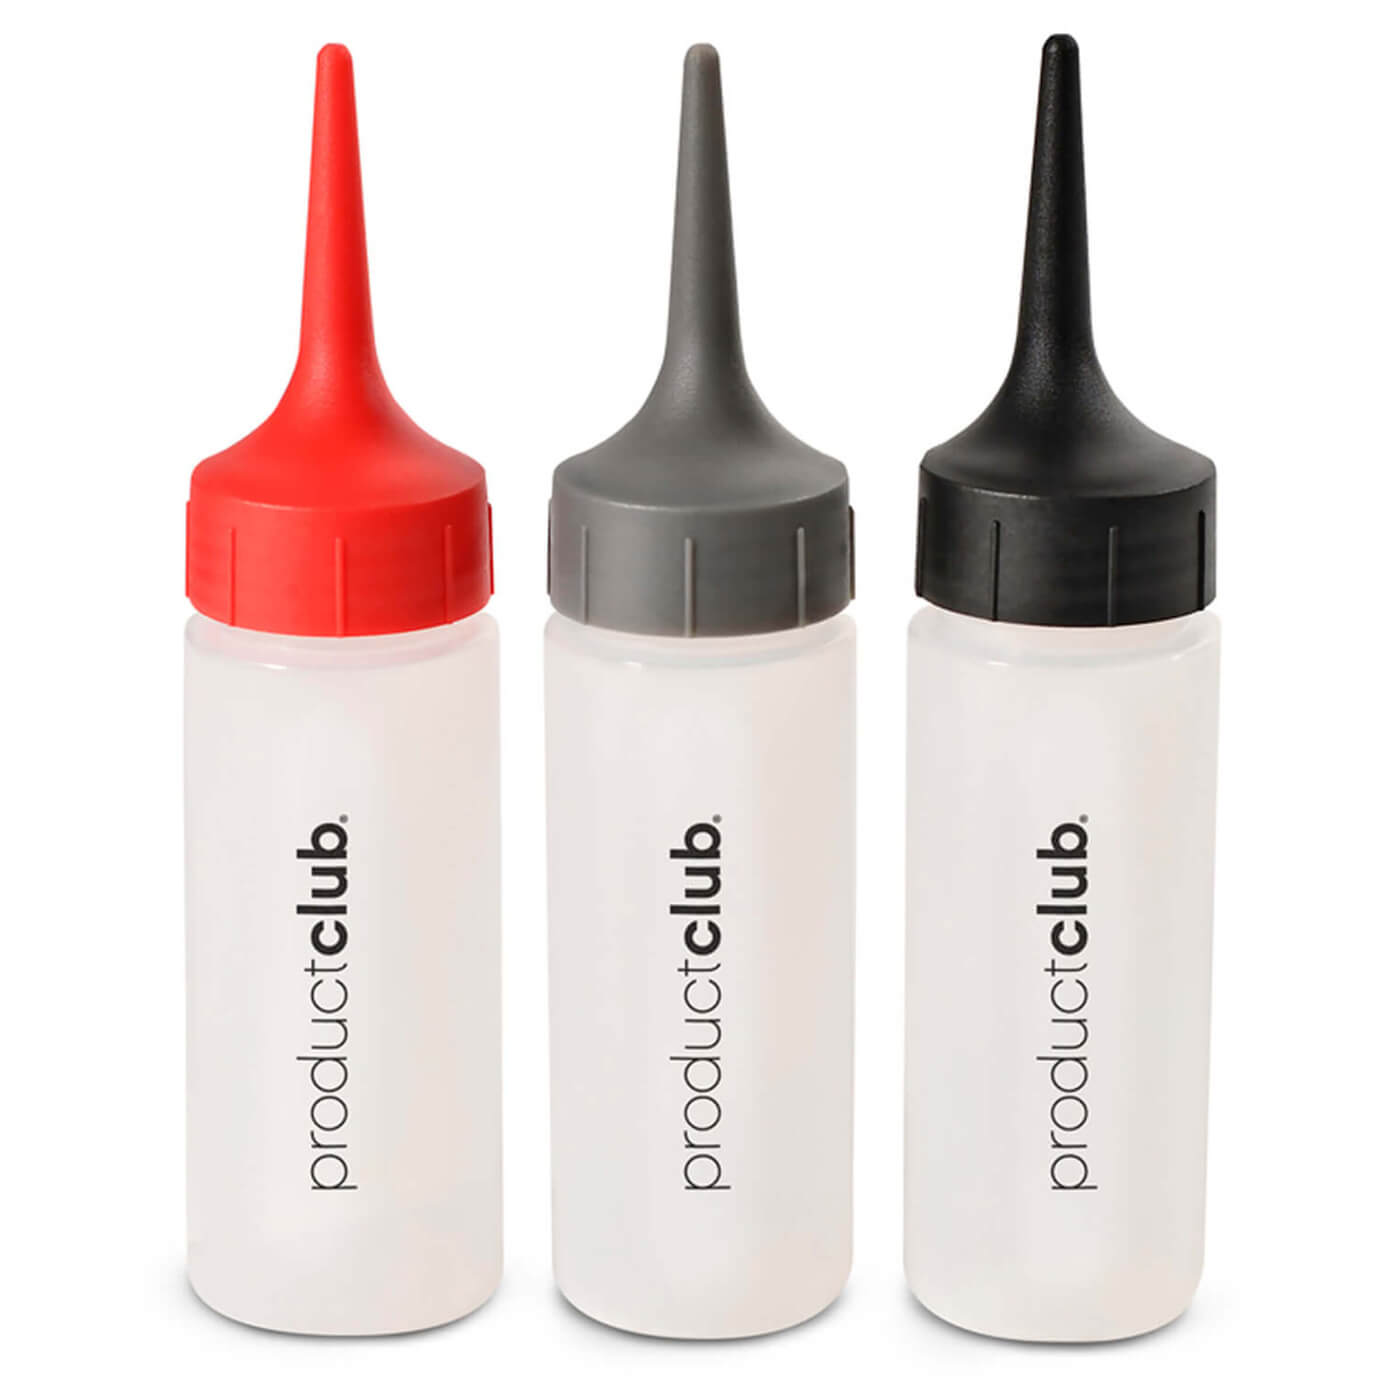 MAB-3 Mini Hair Color Applicator Bottles